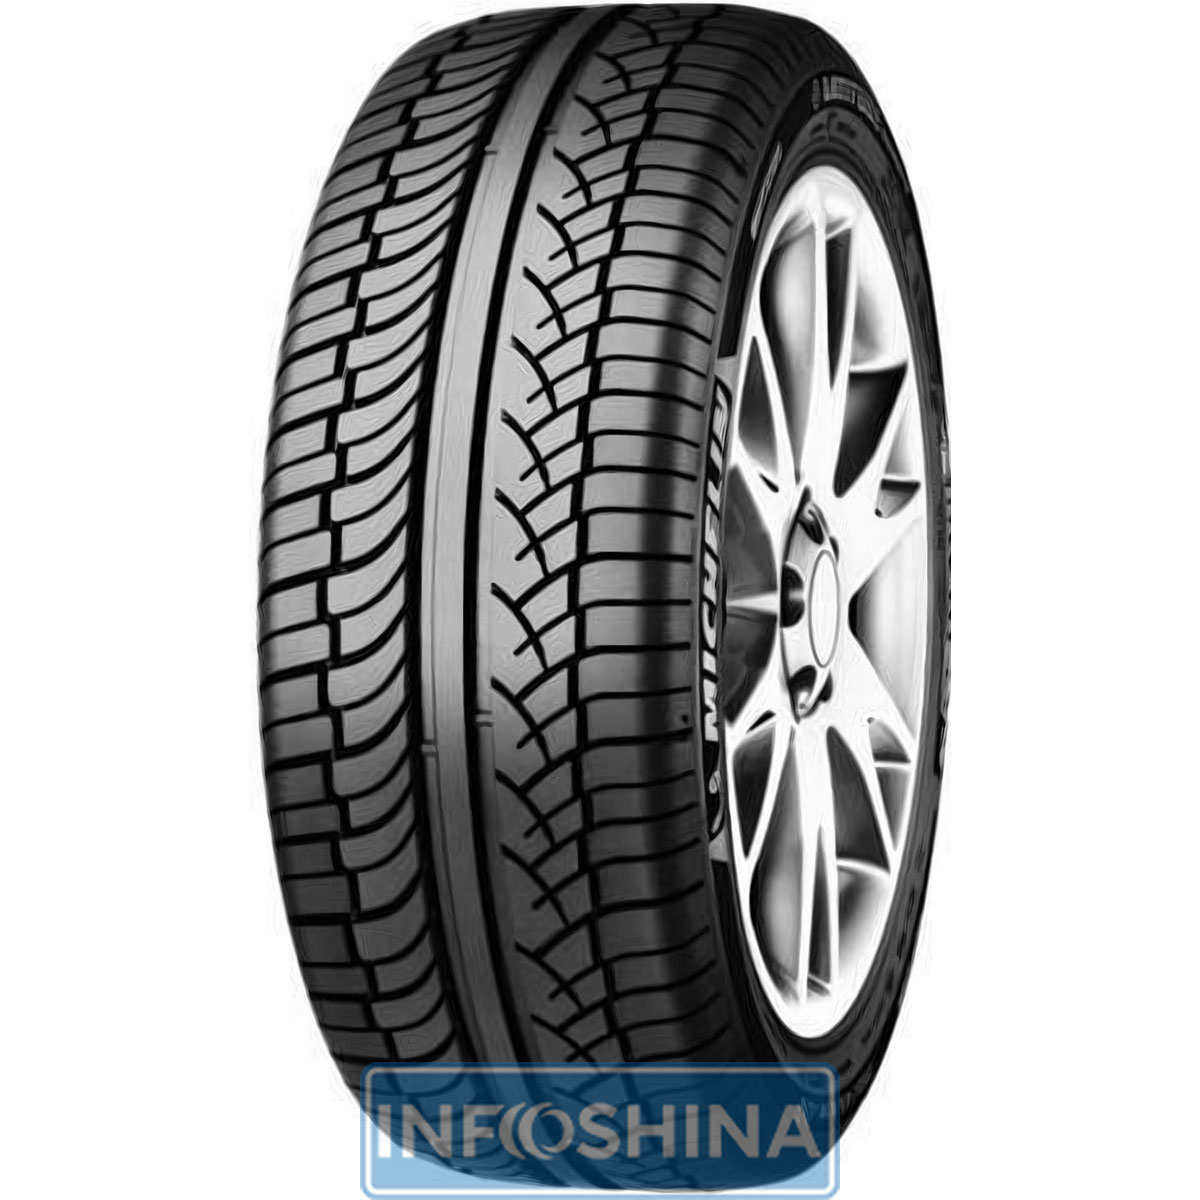 Купить шины Michelin Latitude Diamaris 255/50 R19 103V